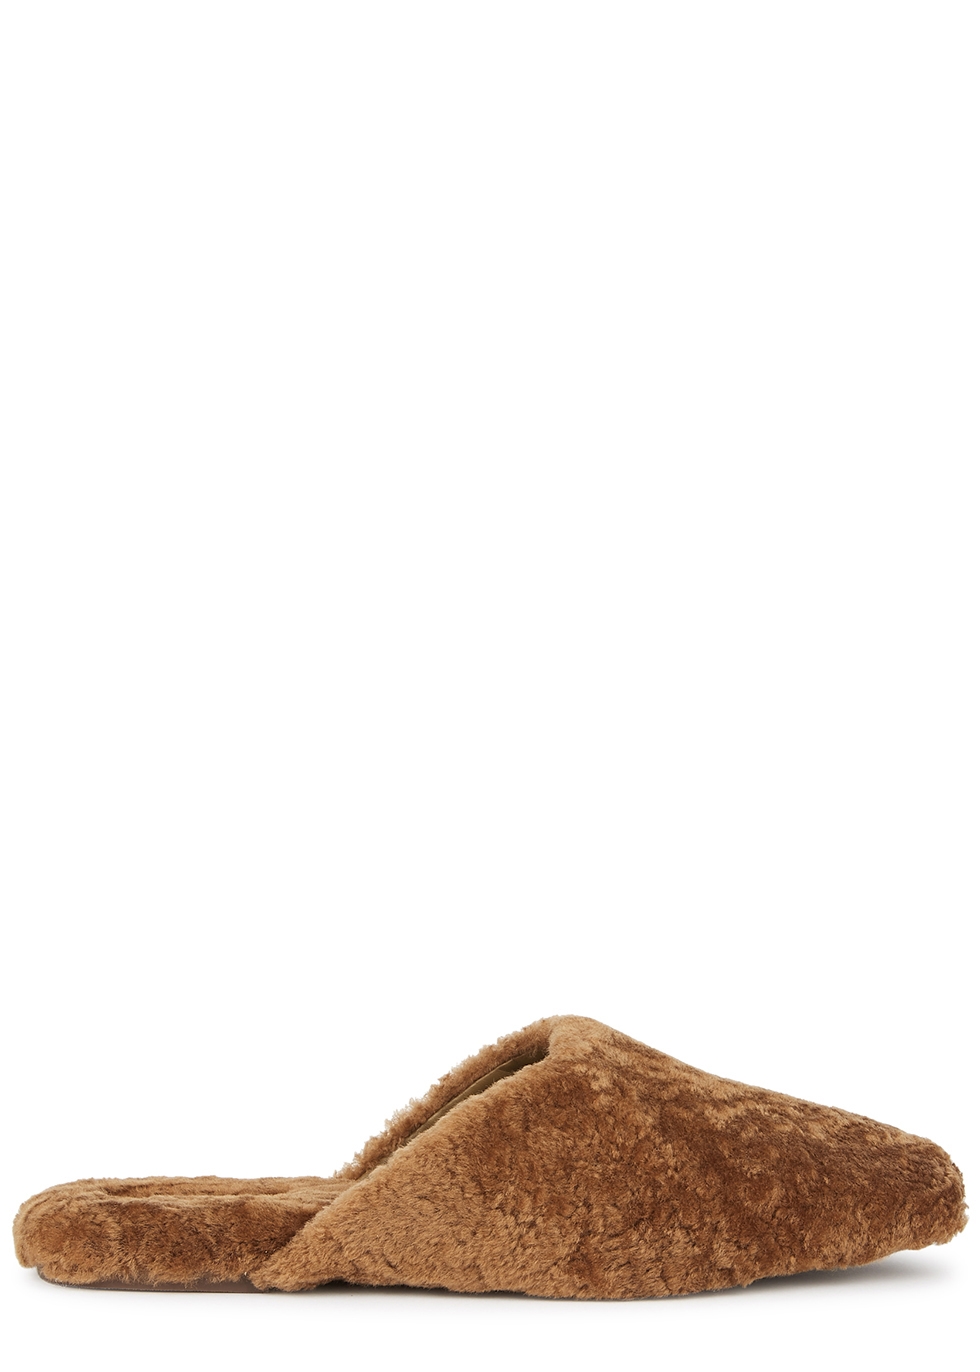 Caela brown shearling slippers